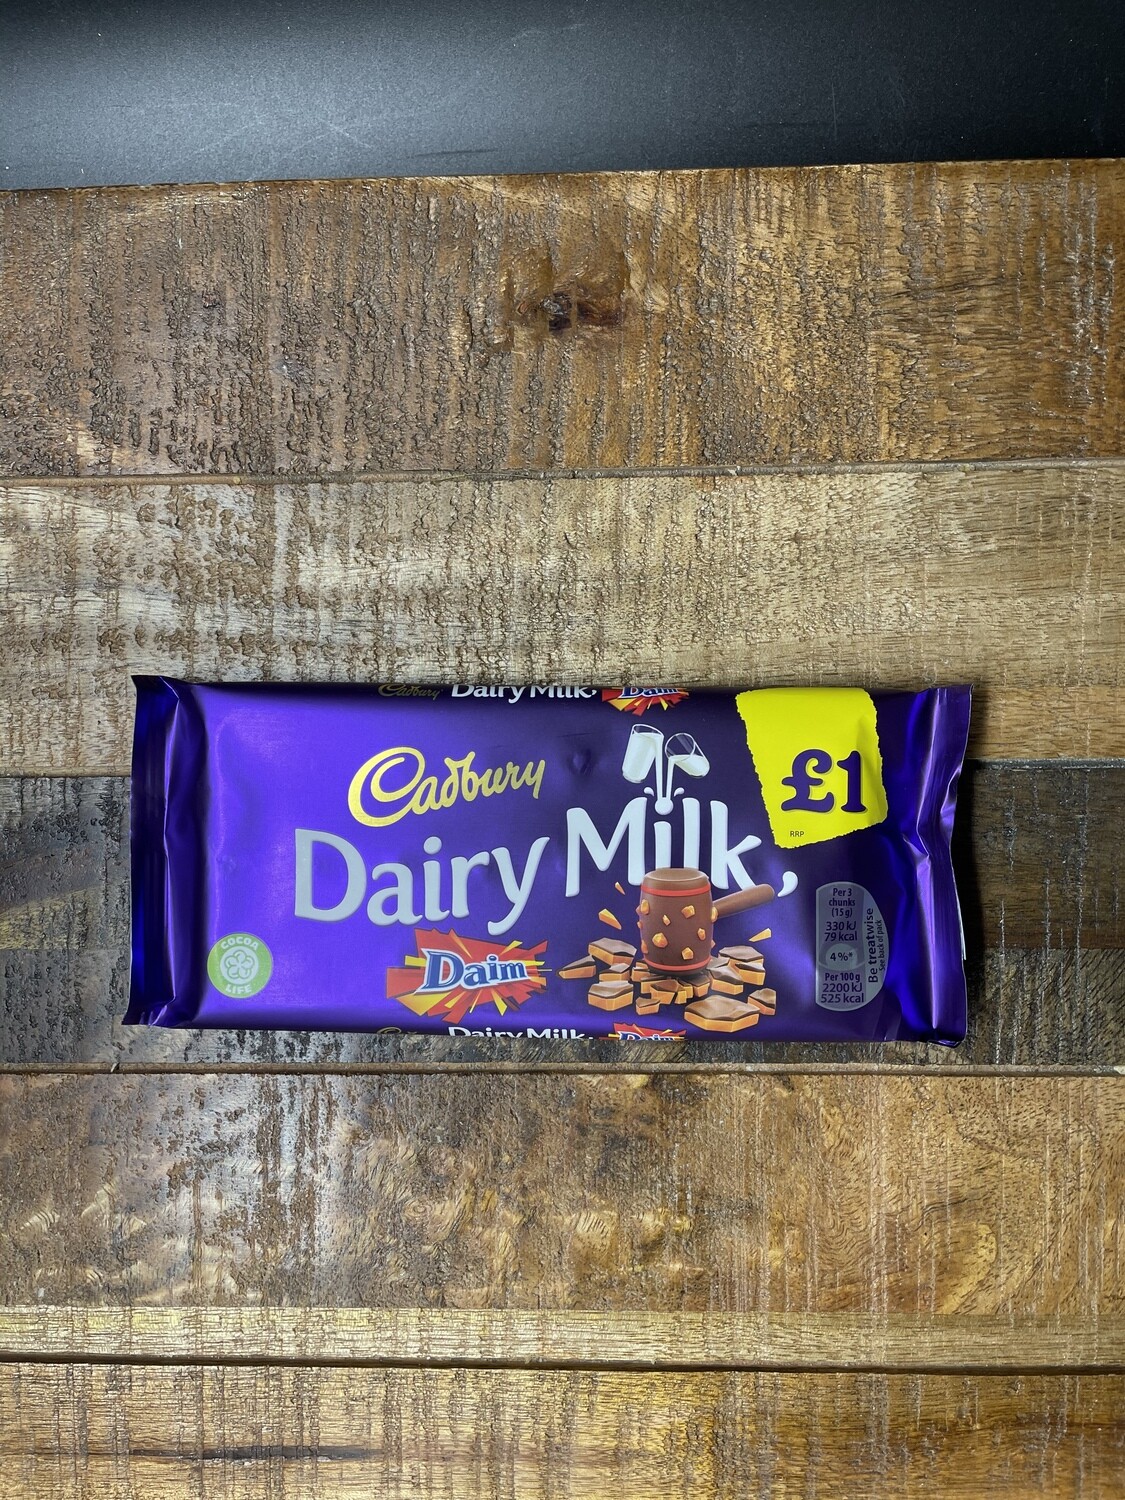 Cadbury Dairy Milk Daim 120g